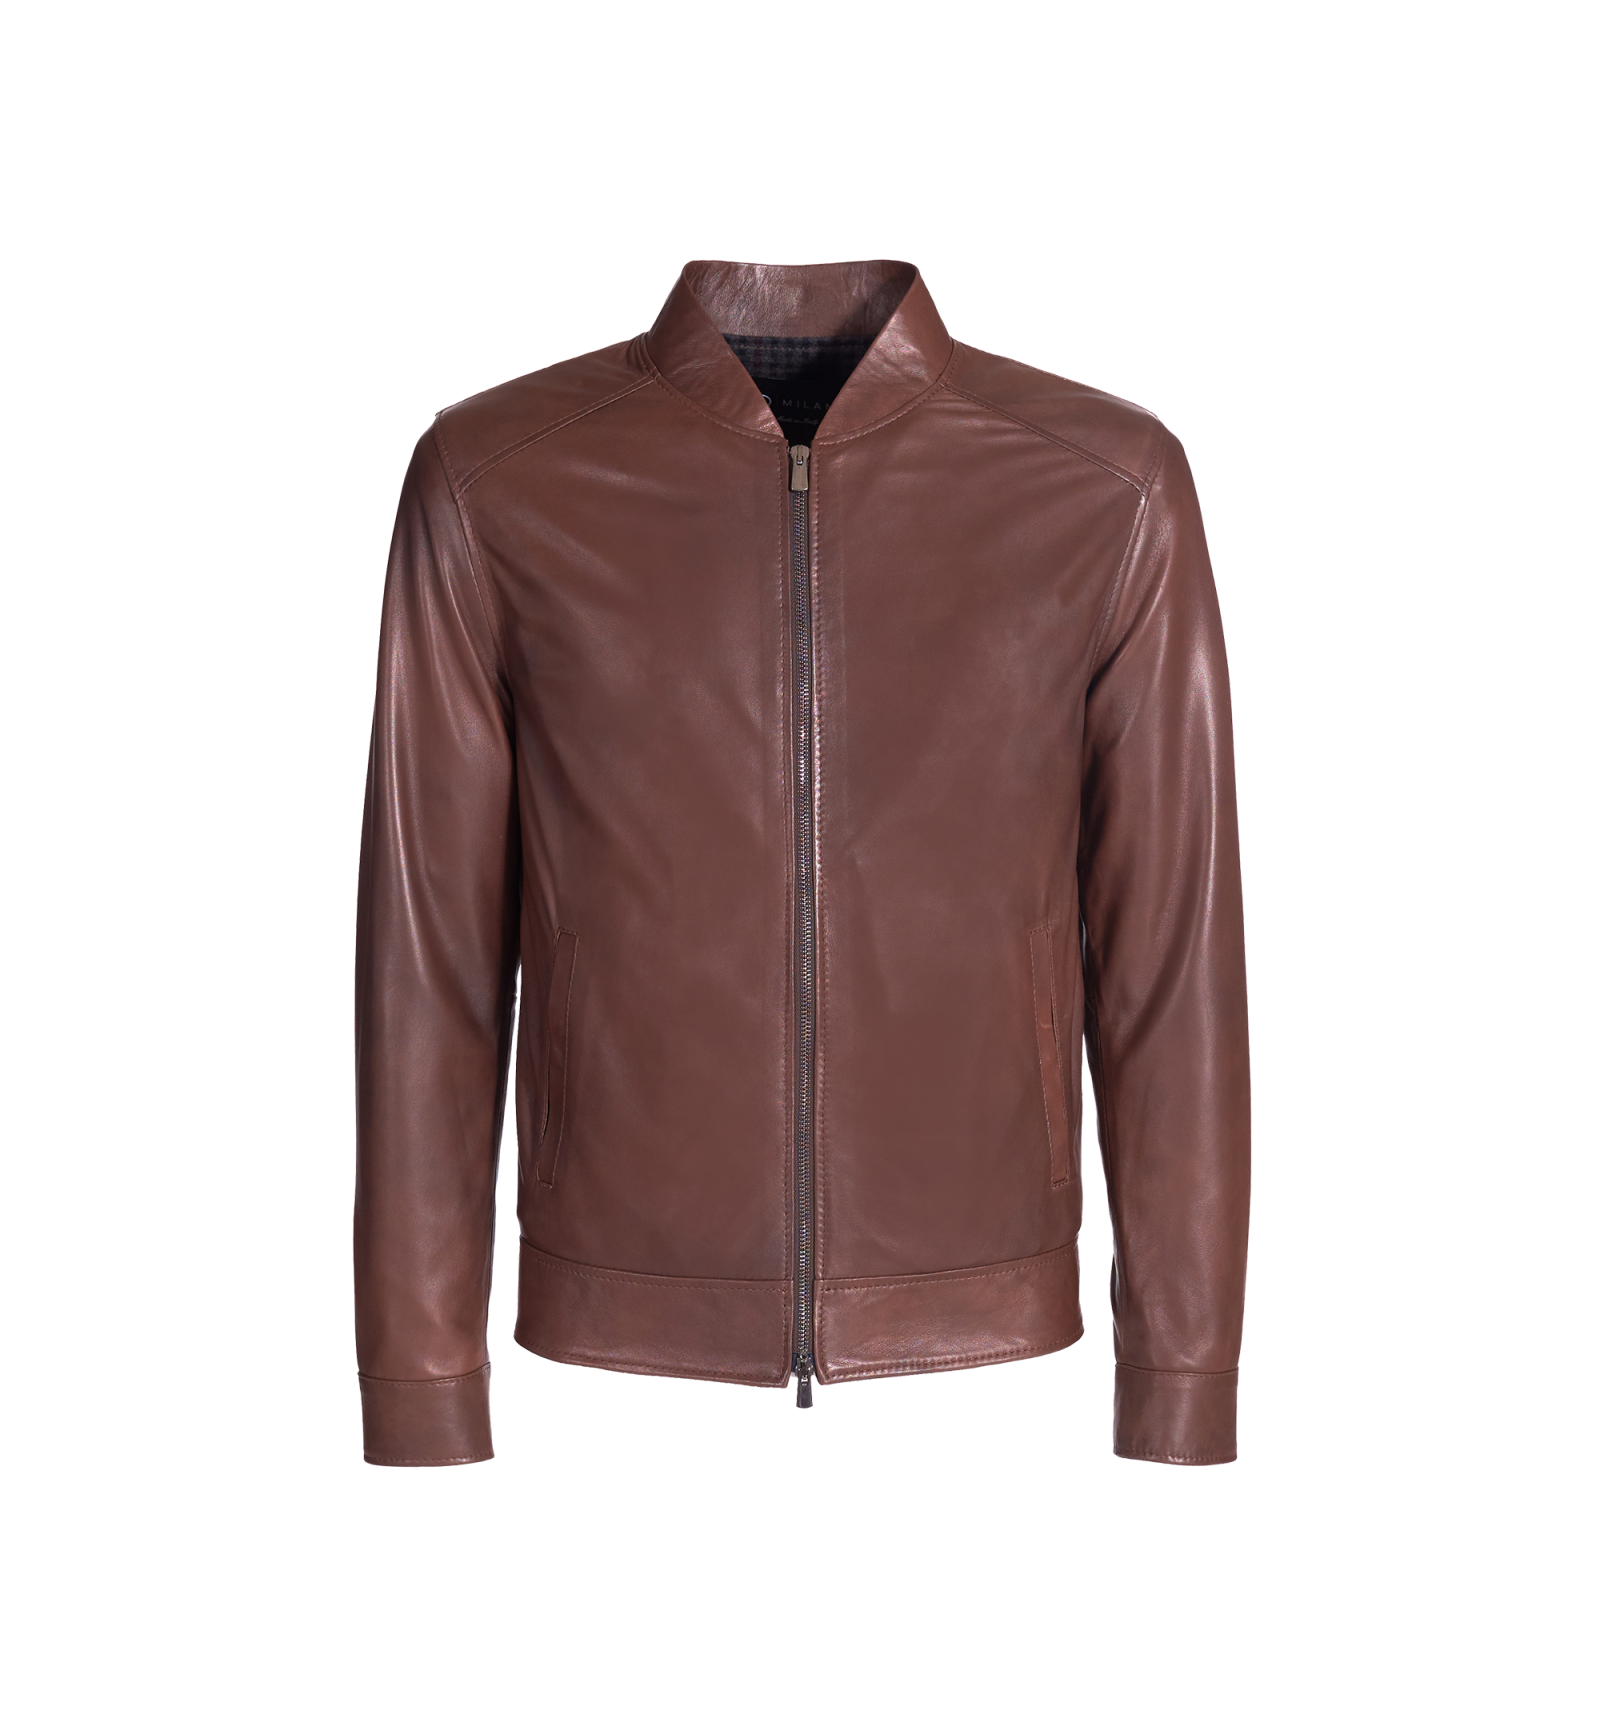 Men's leather jacket biker style cloudy tan color Essen | AdMilano.it